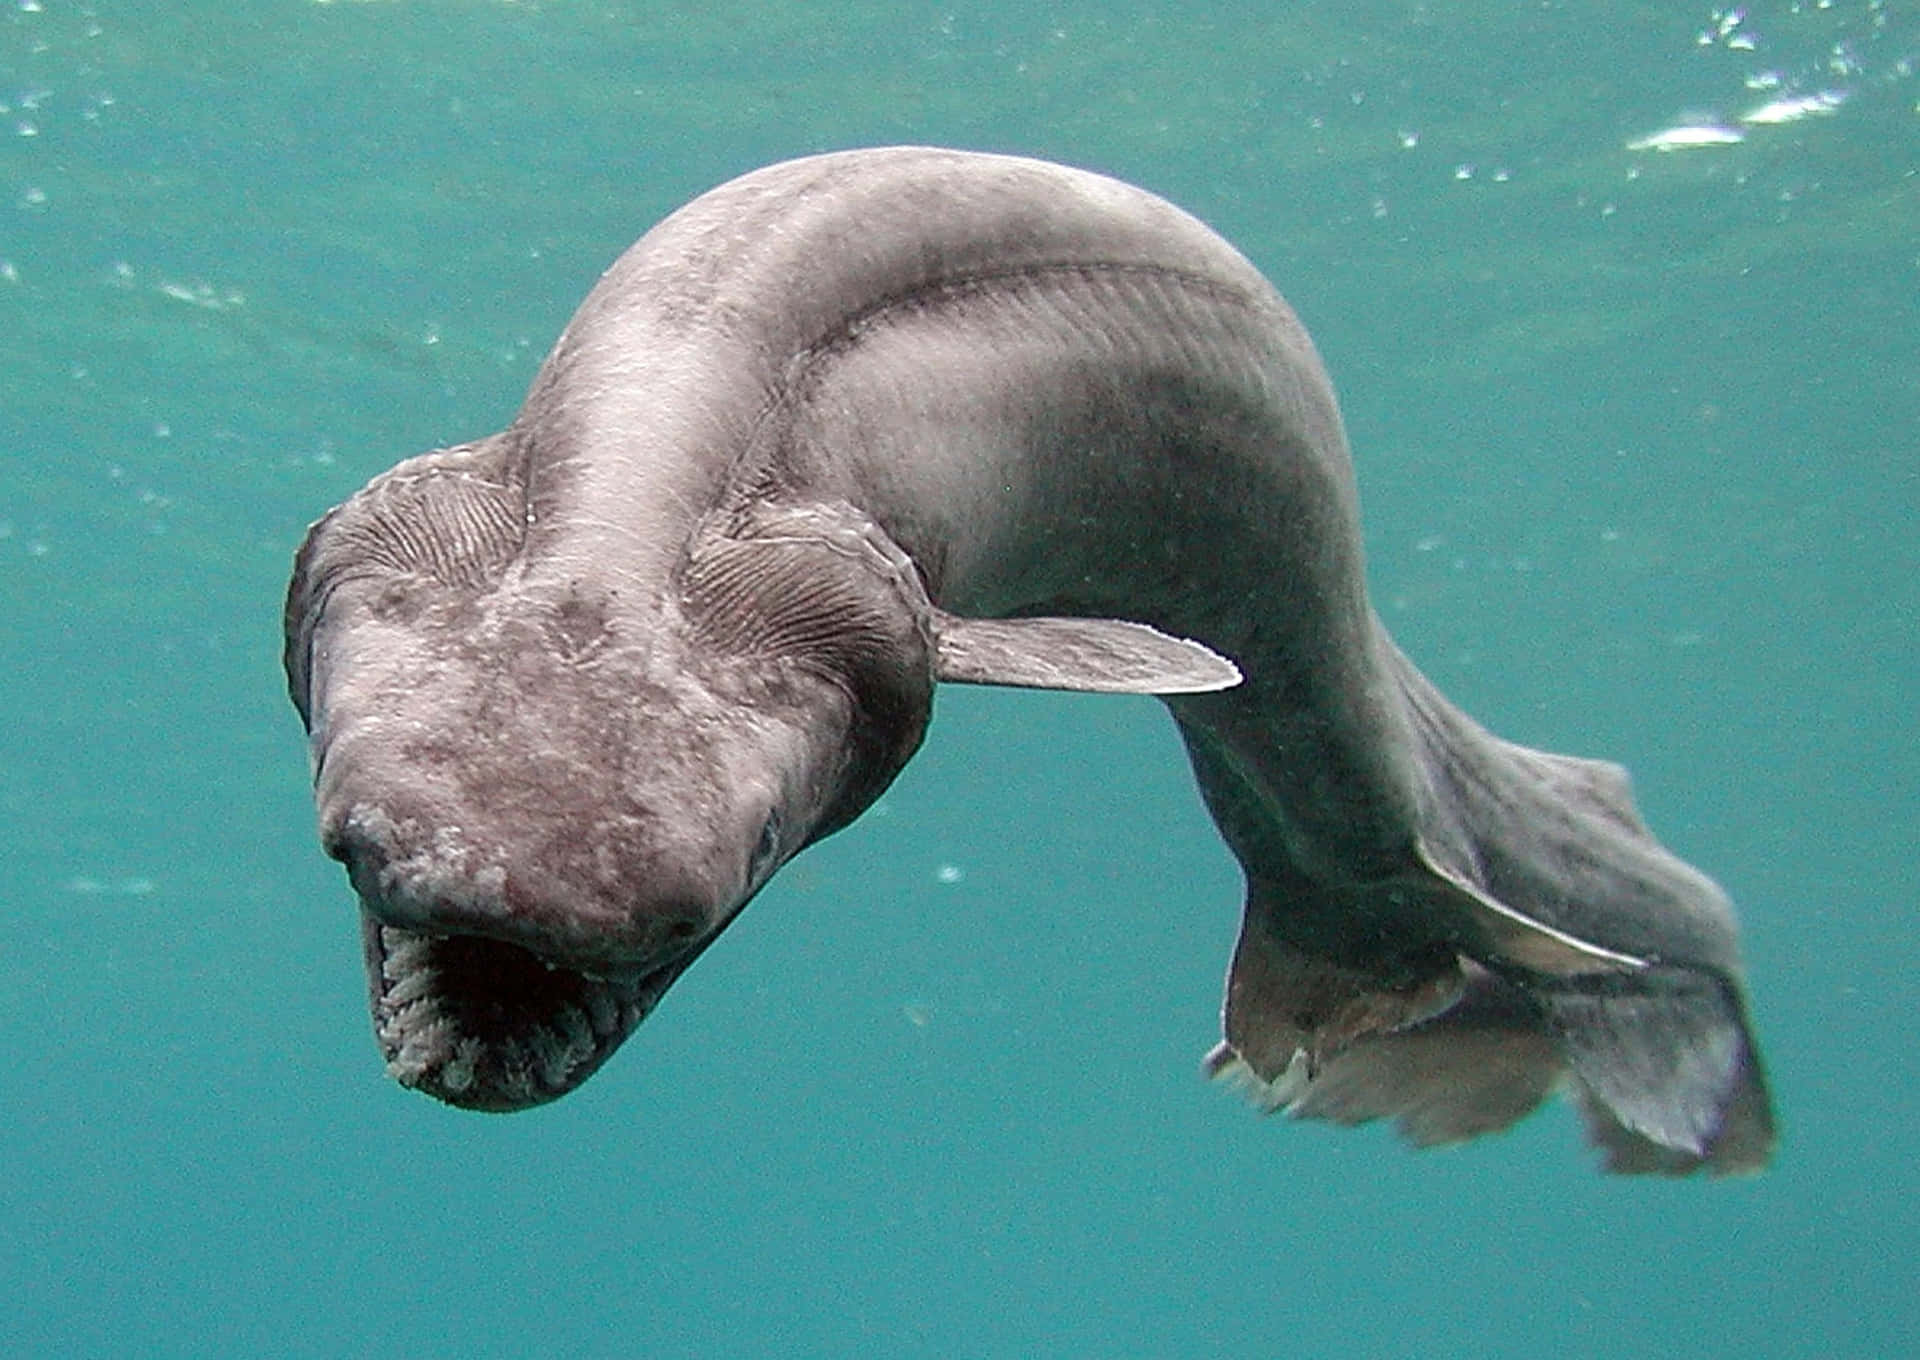 A majestic sea creature inhabiting the ocean depths